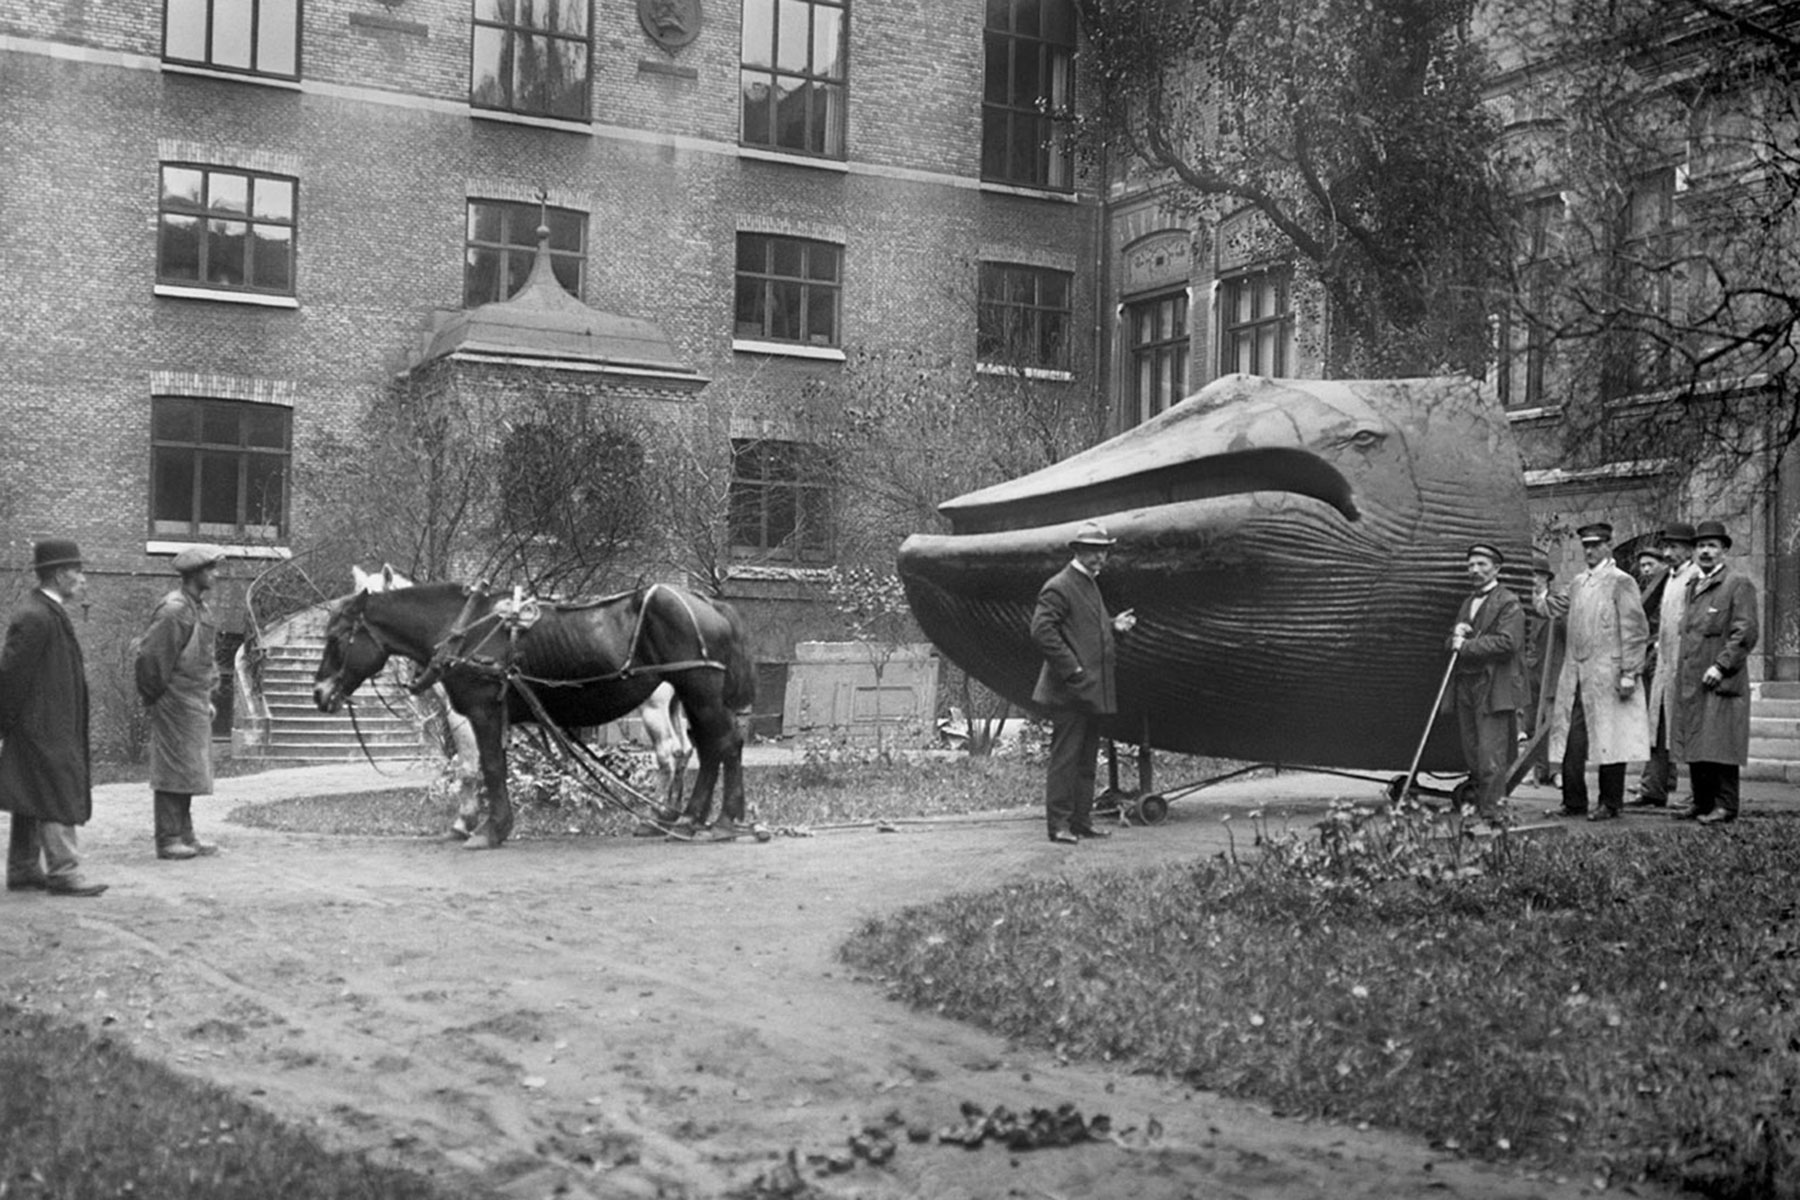 The Malm Whale being moved from Ostindiska Huset to its newly built
premises at Naturhistoriska Museet at Slottsskogen, 1 November 1918.
Photos Elisabet Petersson.